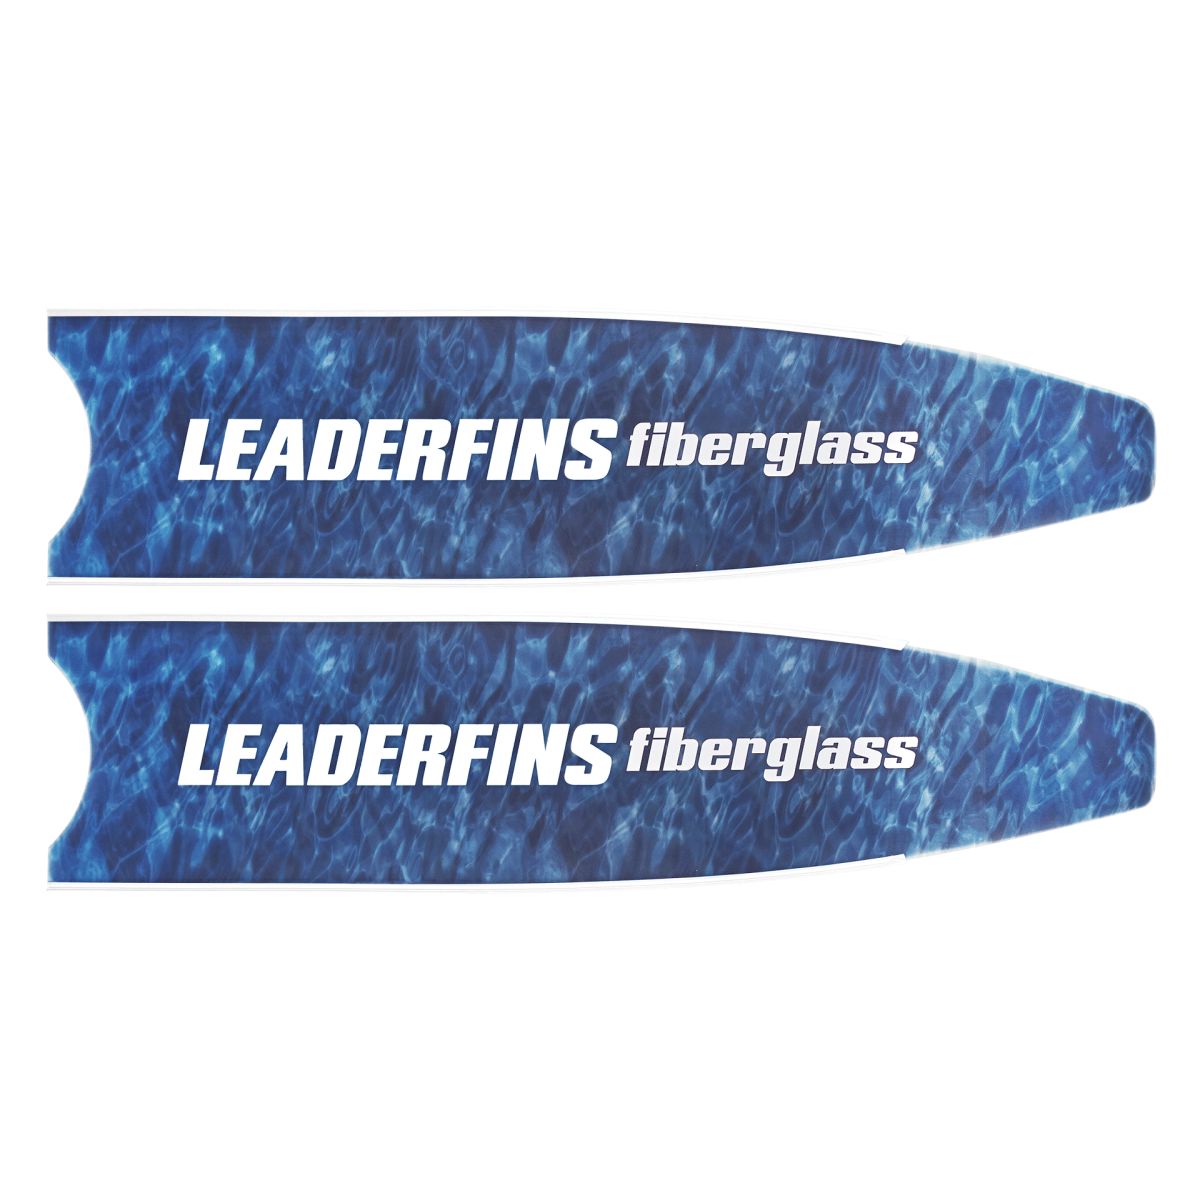 Leaderfins Blue Camo Fiberglass - FreedivingWarehouse